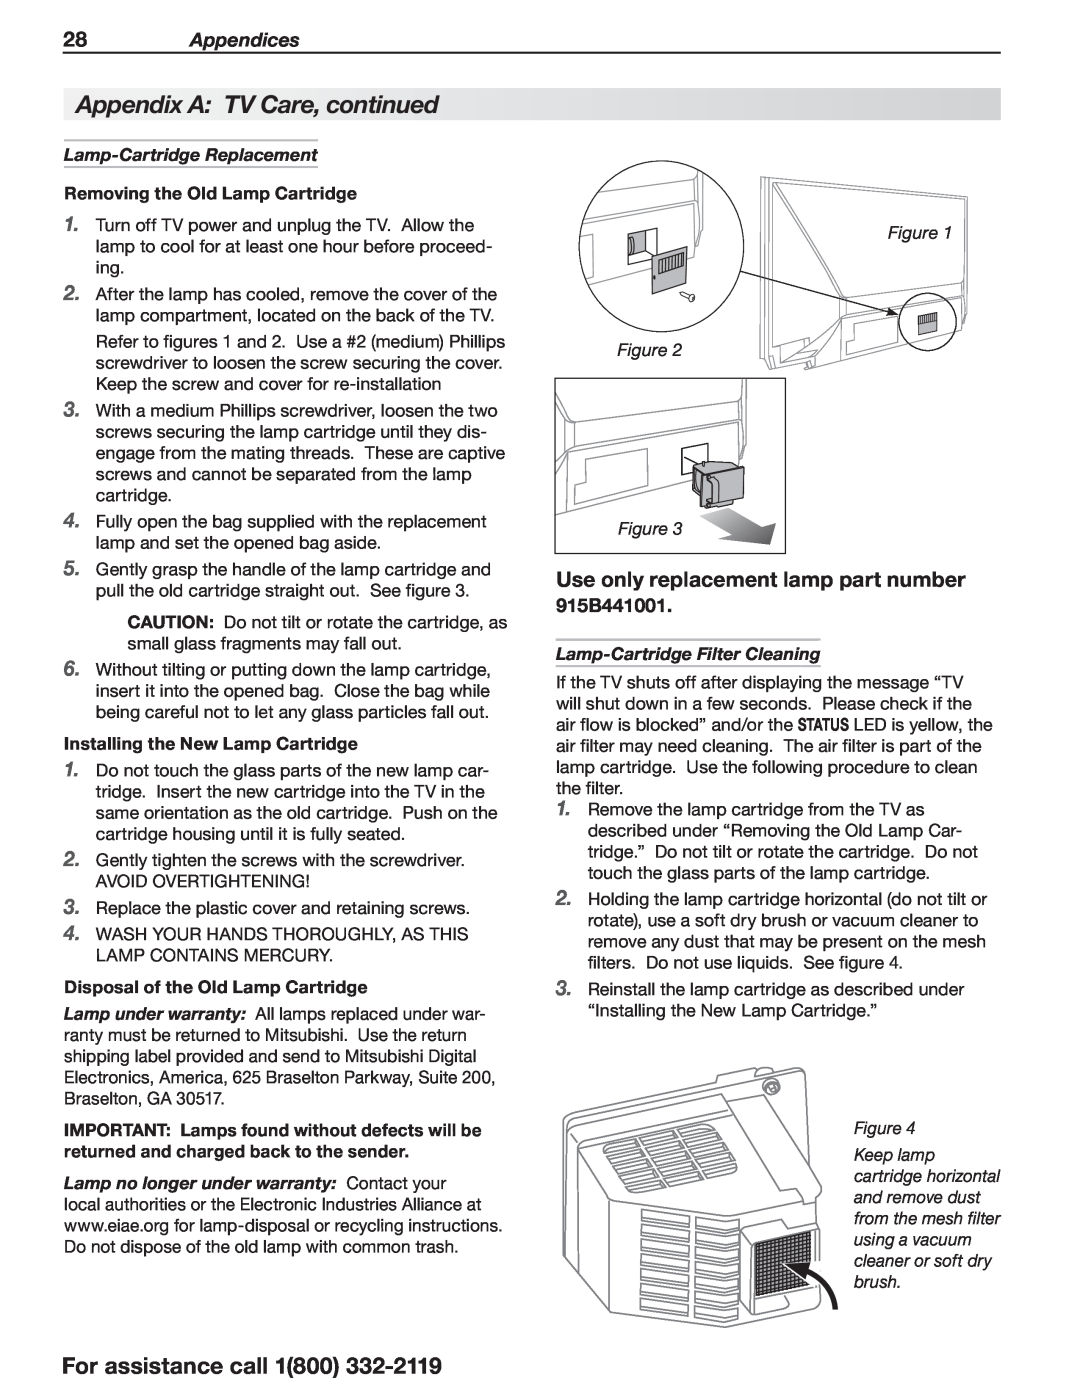 Mitsubishi Electronics 838 manual Appendix A TV Care, continued, 28Appendices, Figure Figure, For assistance call 